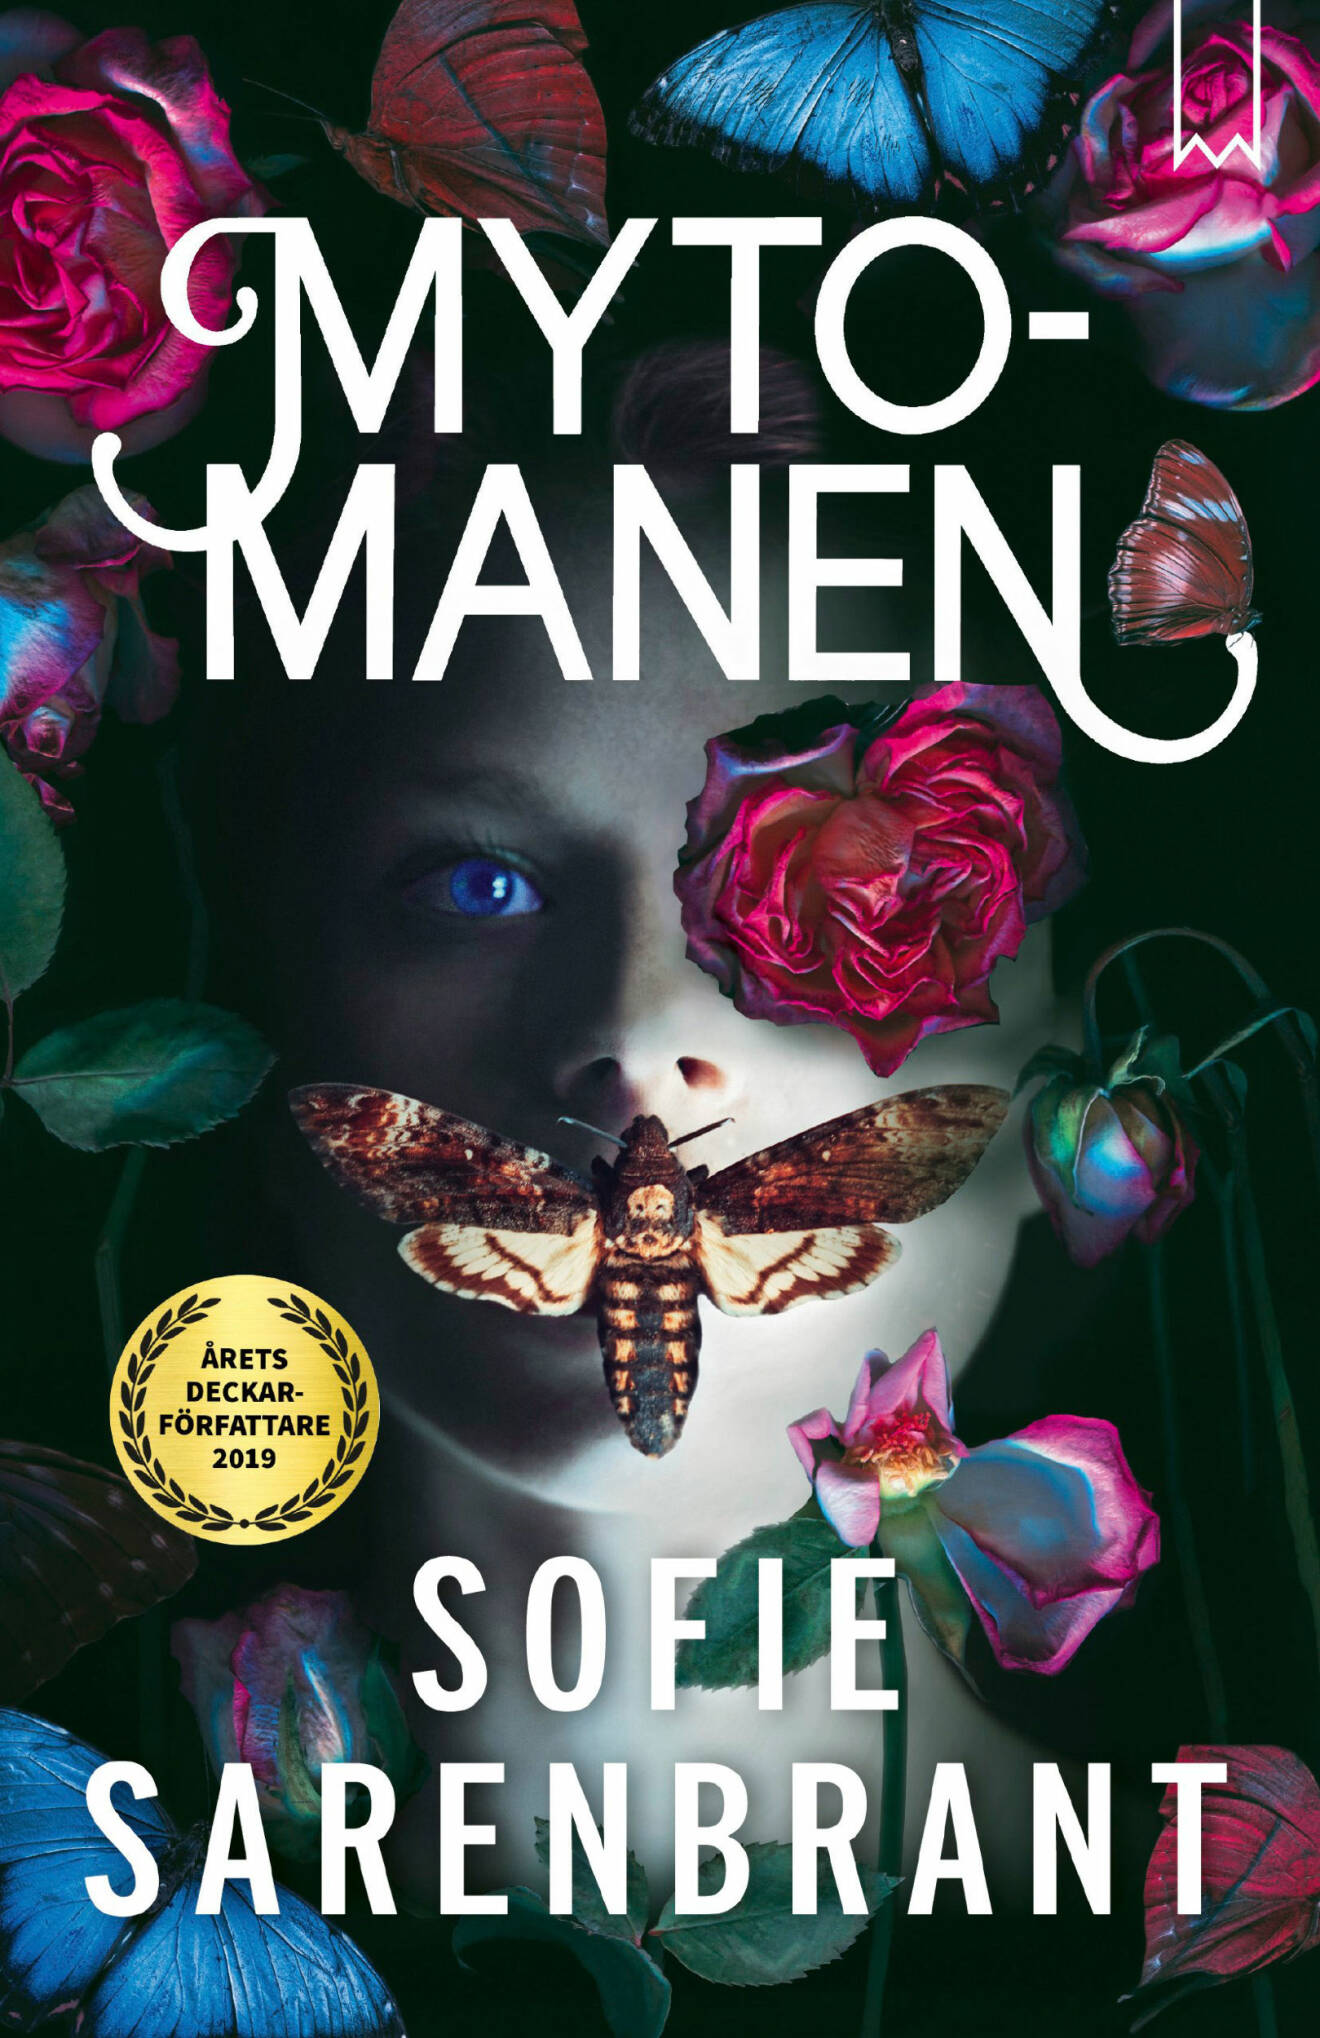 Mytomanen, Sofie Sarenbrandt. Pocket.